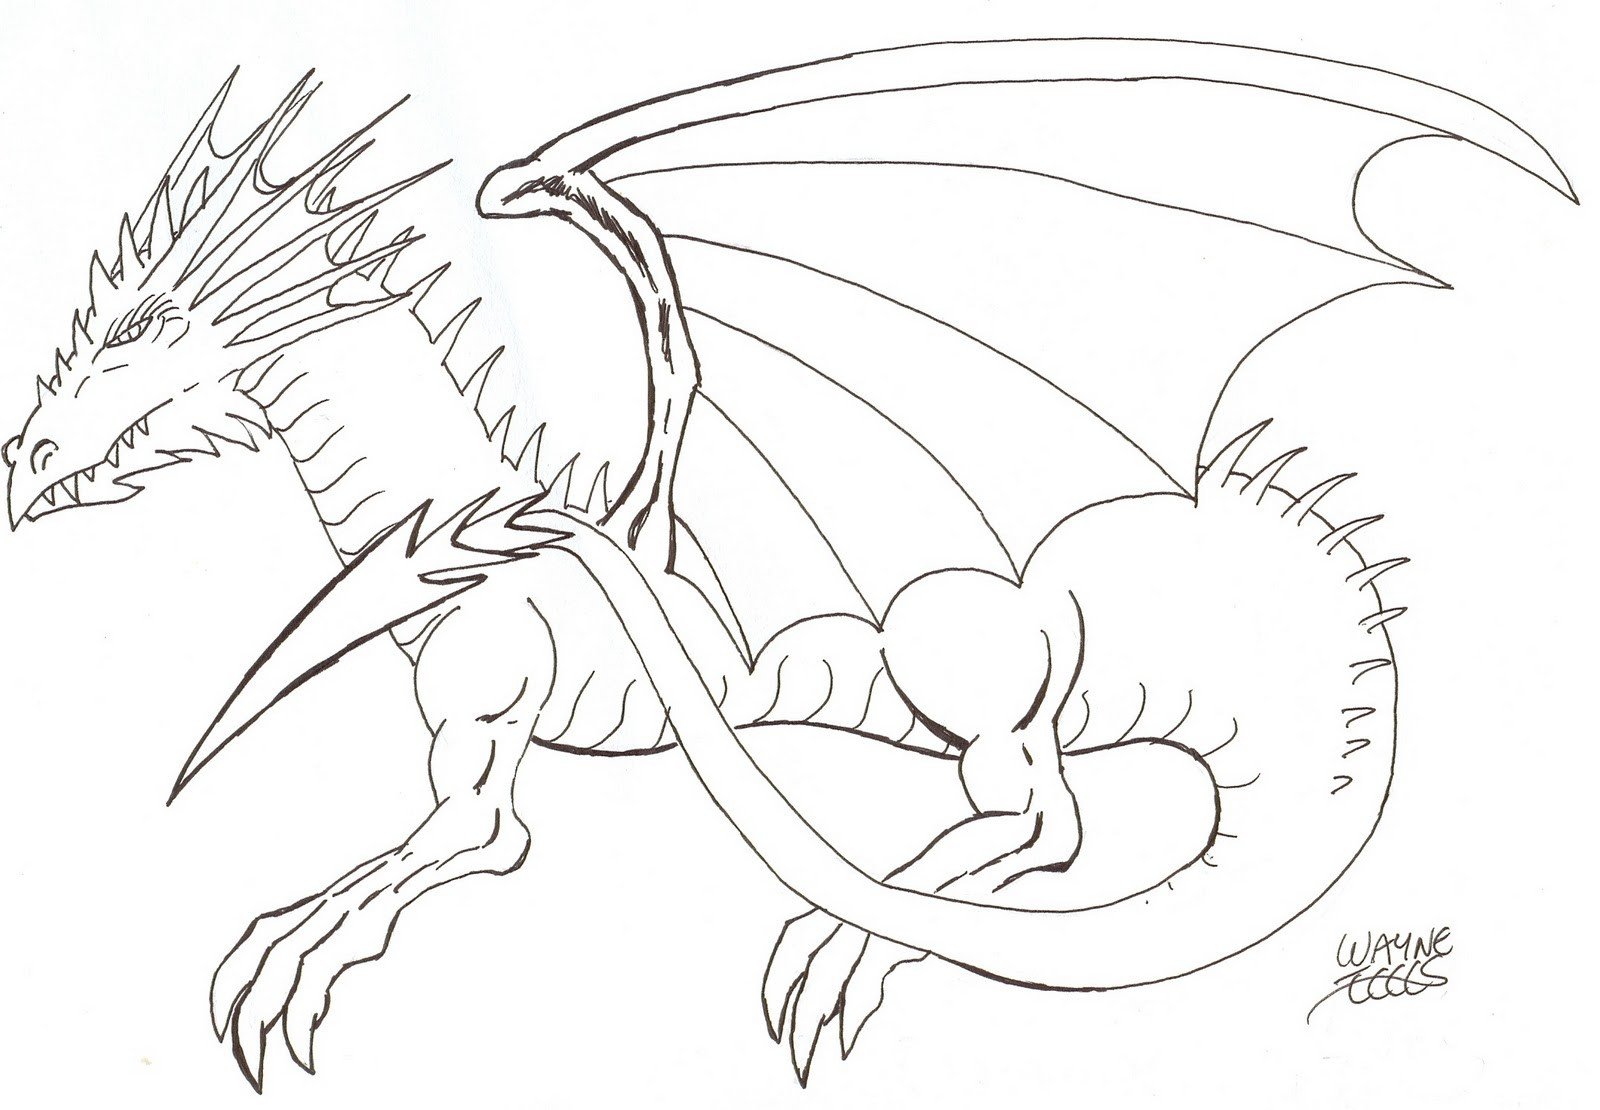 Wayne Tully Horror Art How To Draw A Dragon